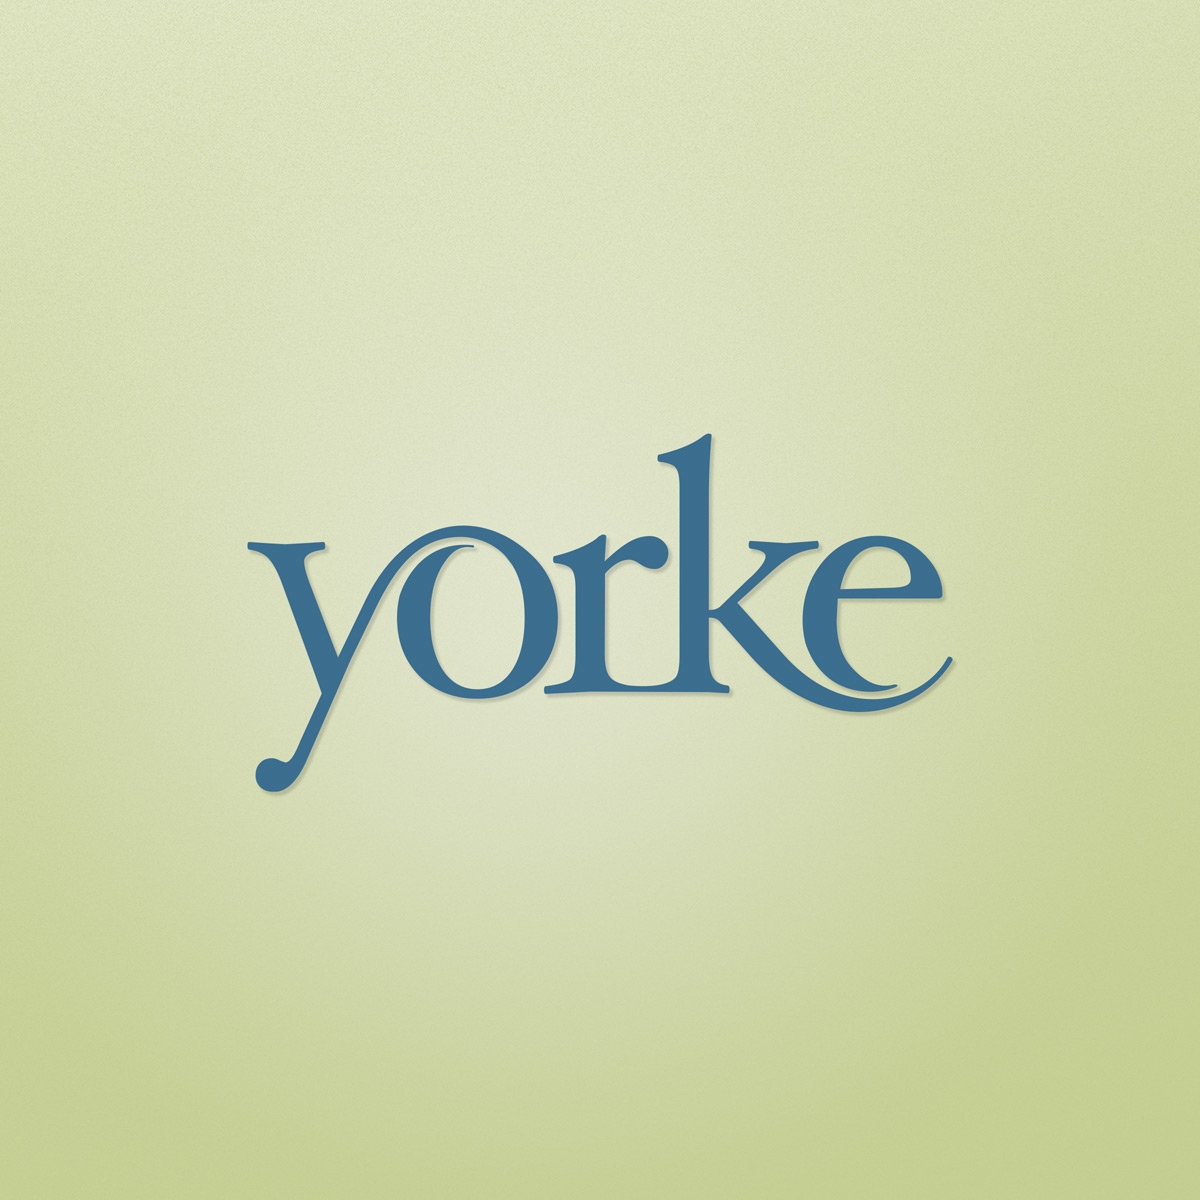 Yorke Direct Branding